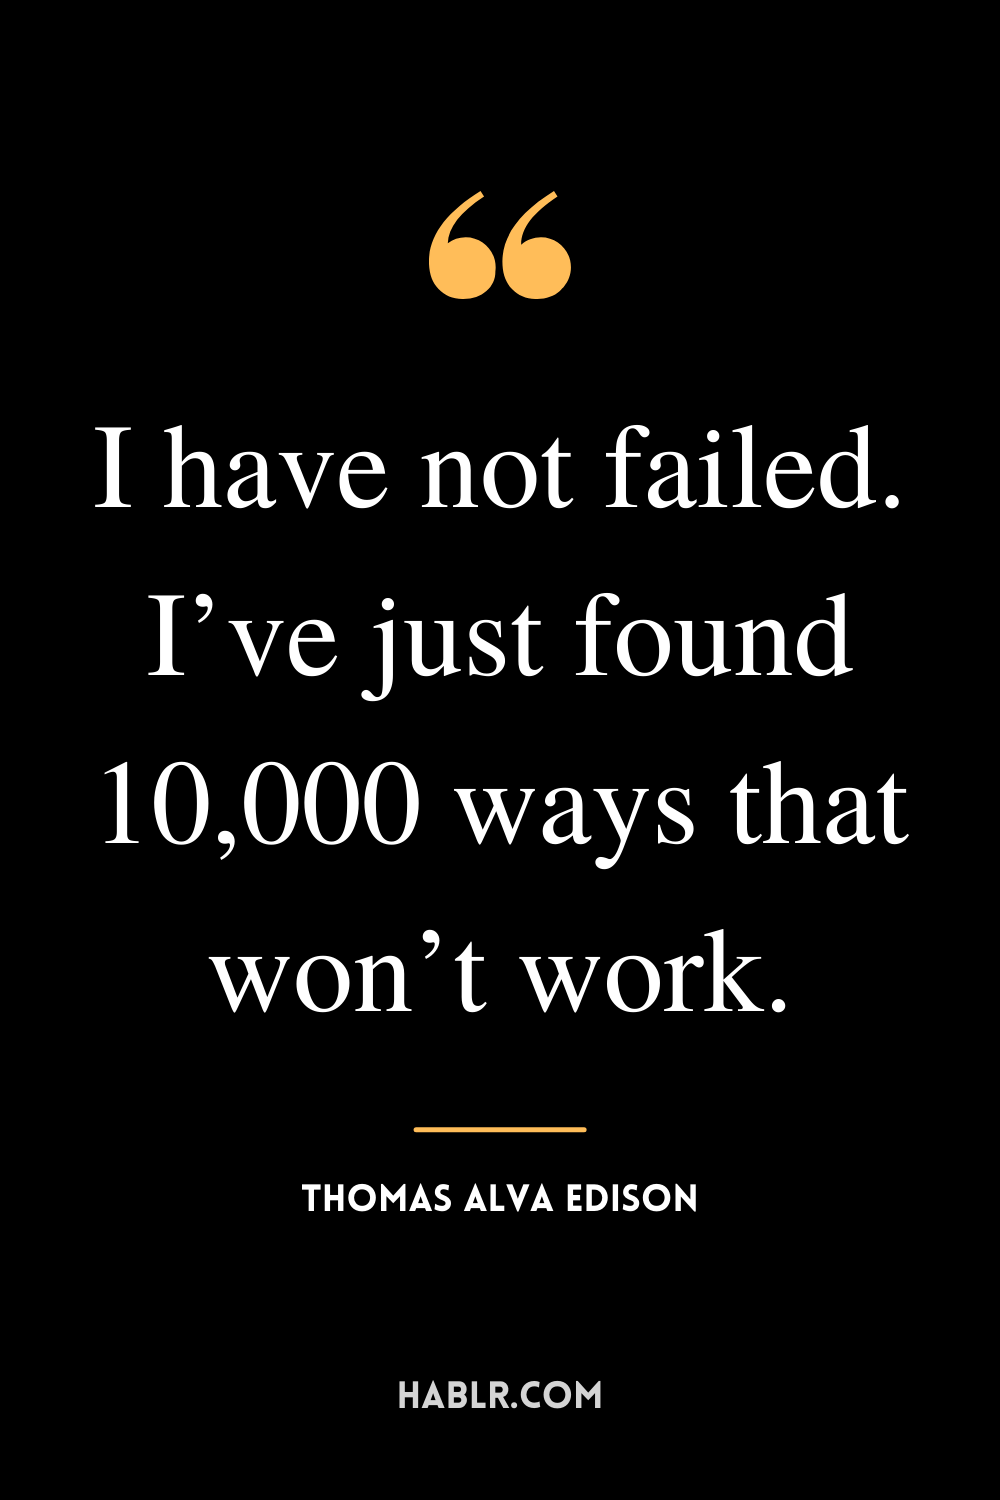 “I have not failed. I’ve just found 10,000 ways that won’t work.” -Thomas Alva Edison